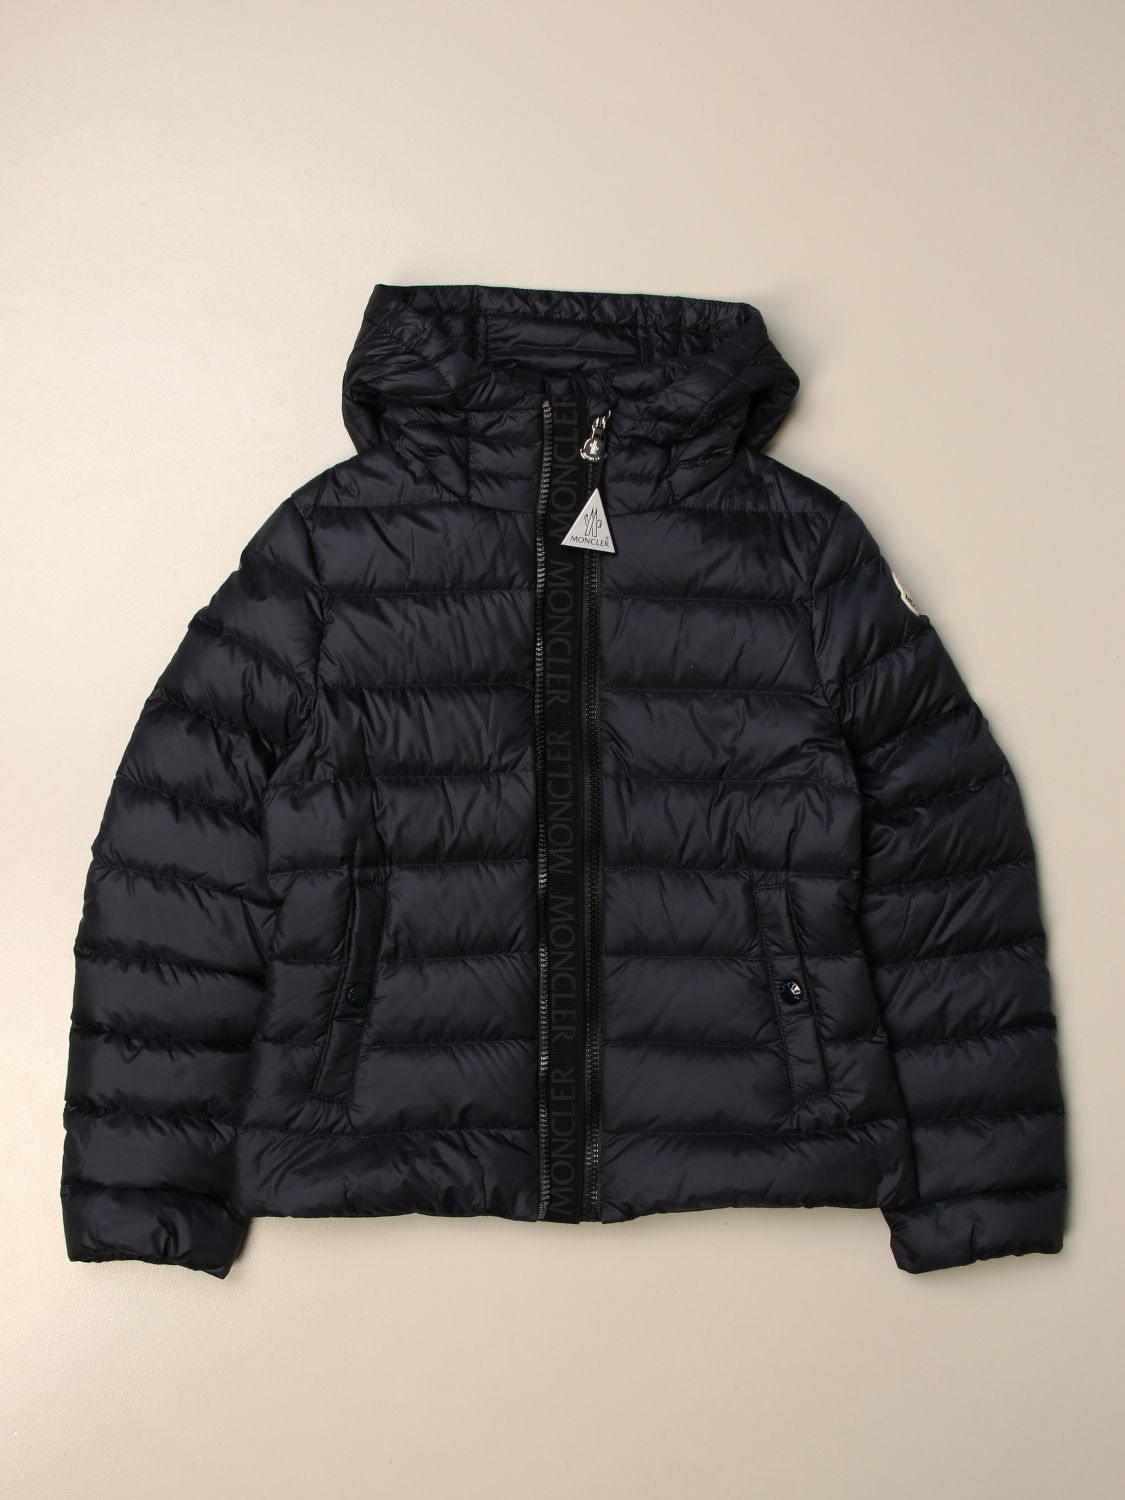 MONCLER: Glycine down jacket in padded nylon - Blue | Moncler jacket ...